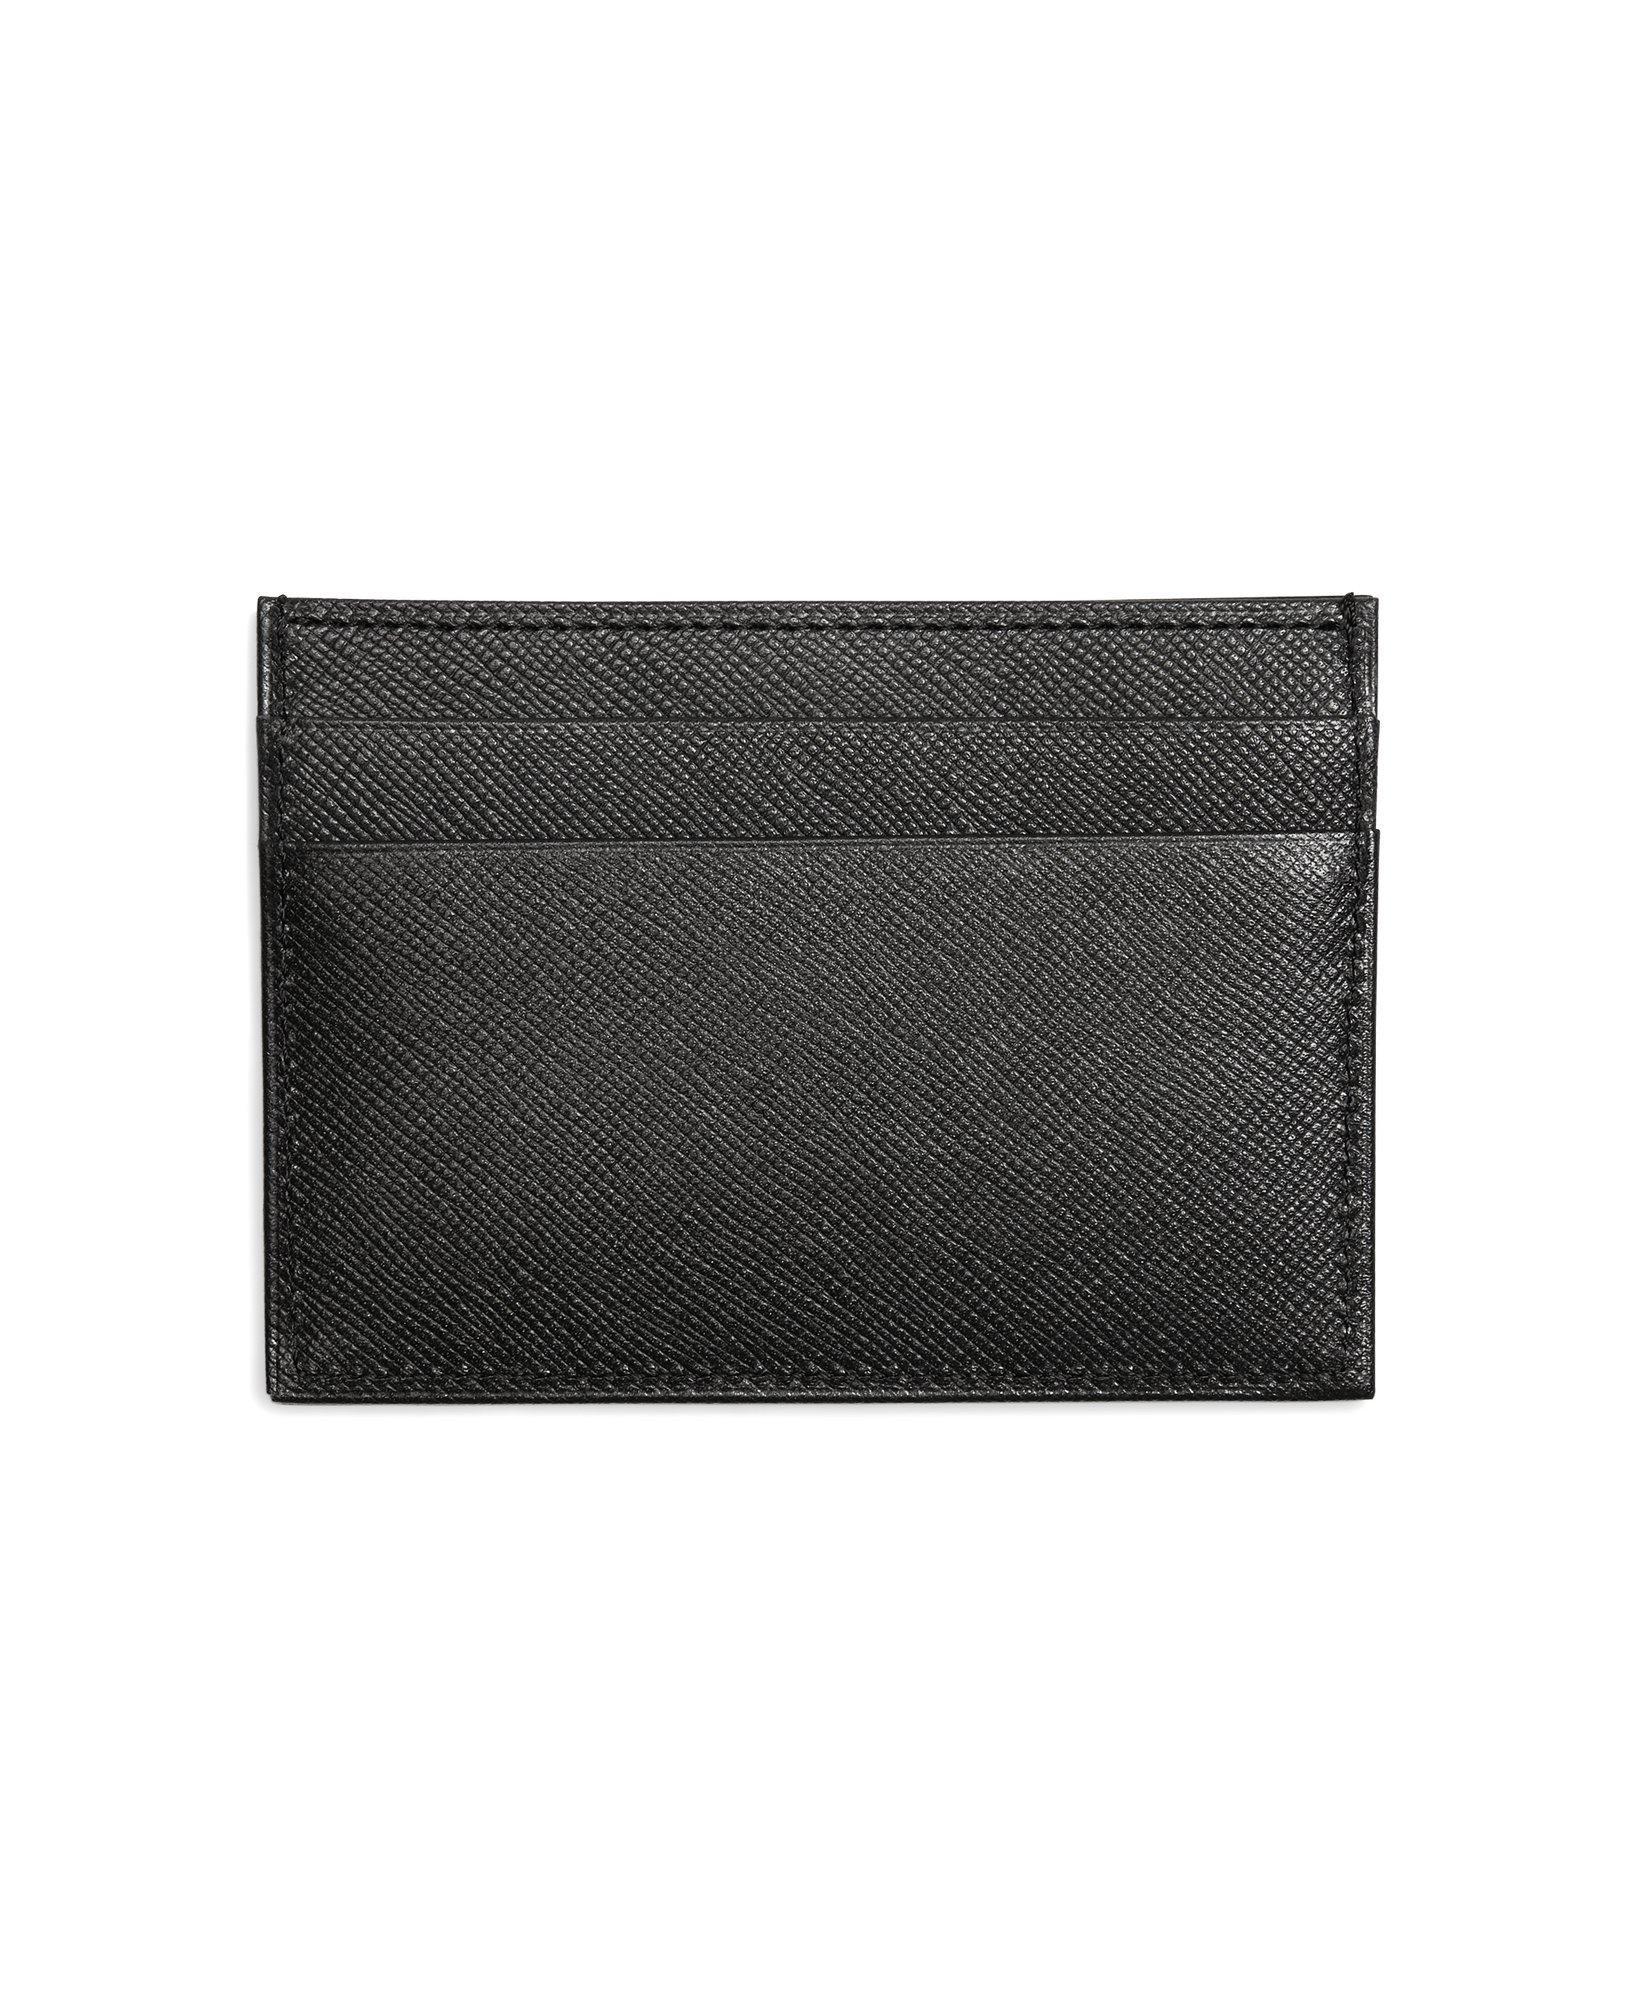 Saffiano Leather Card Case, image 2